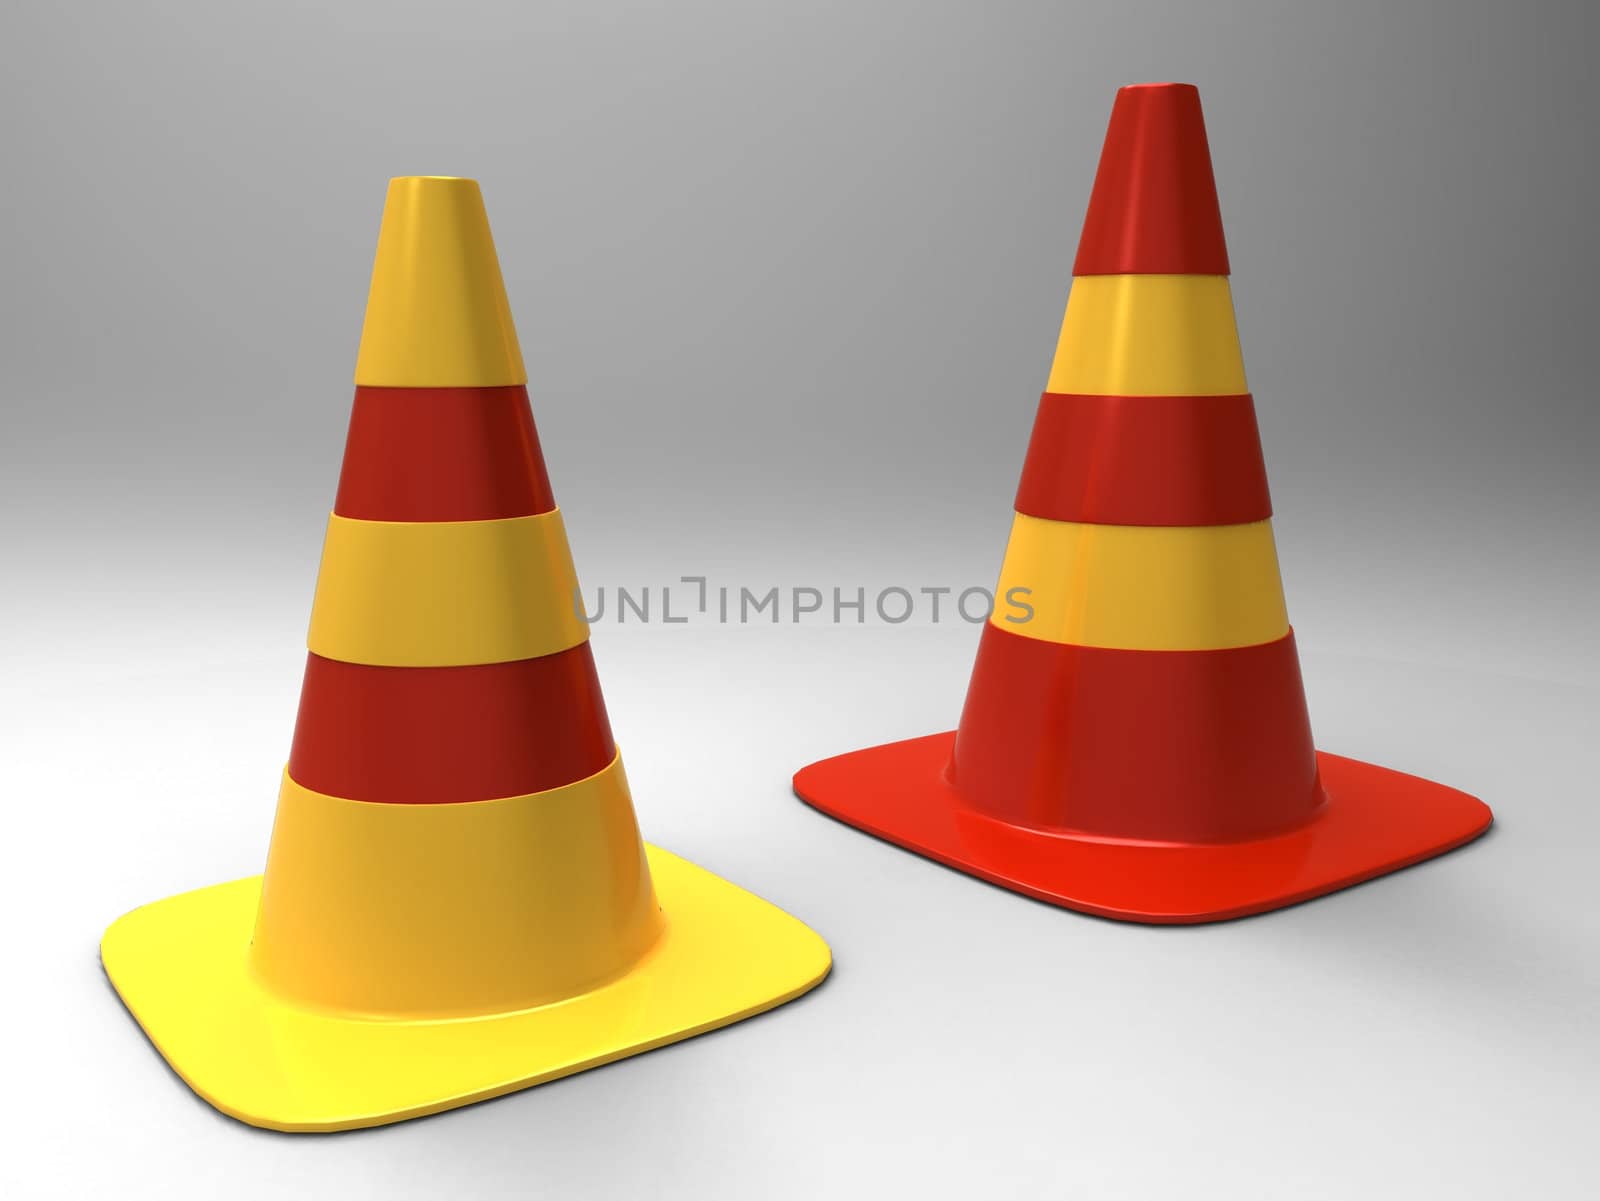 the traffic cone